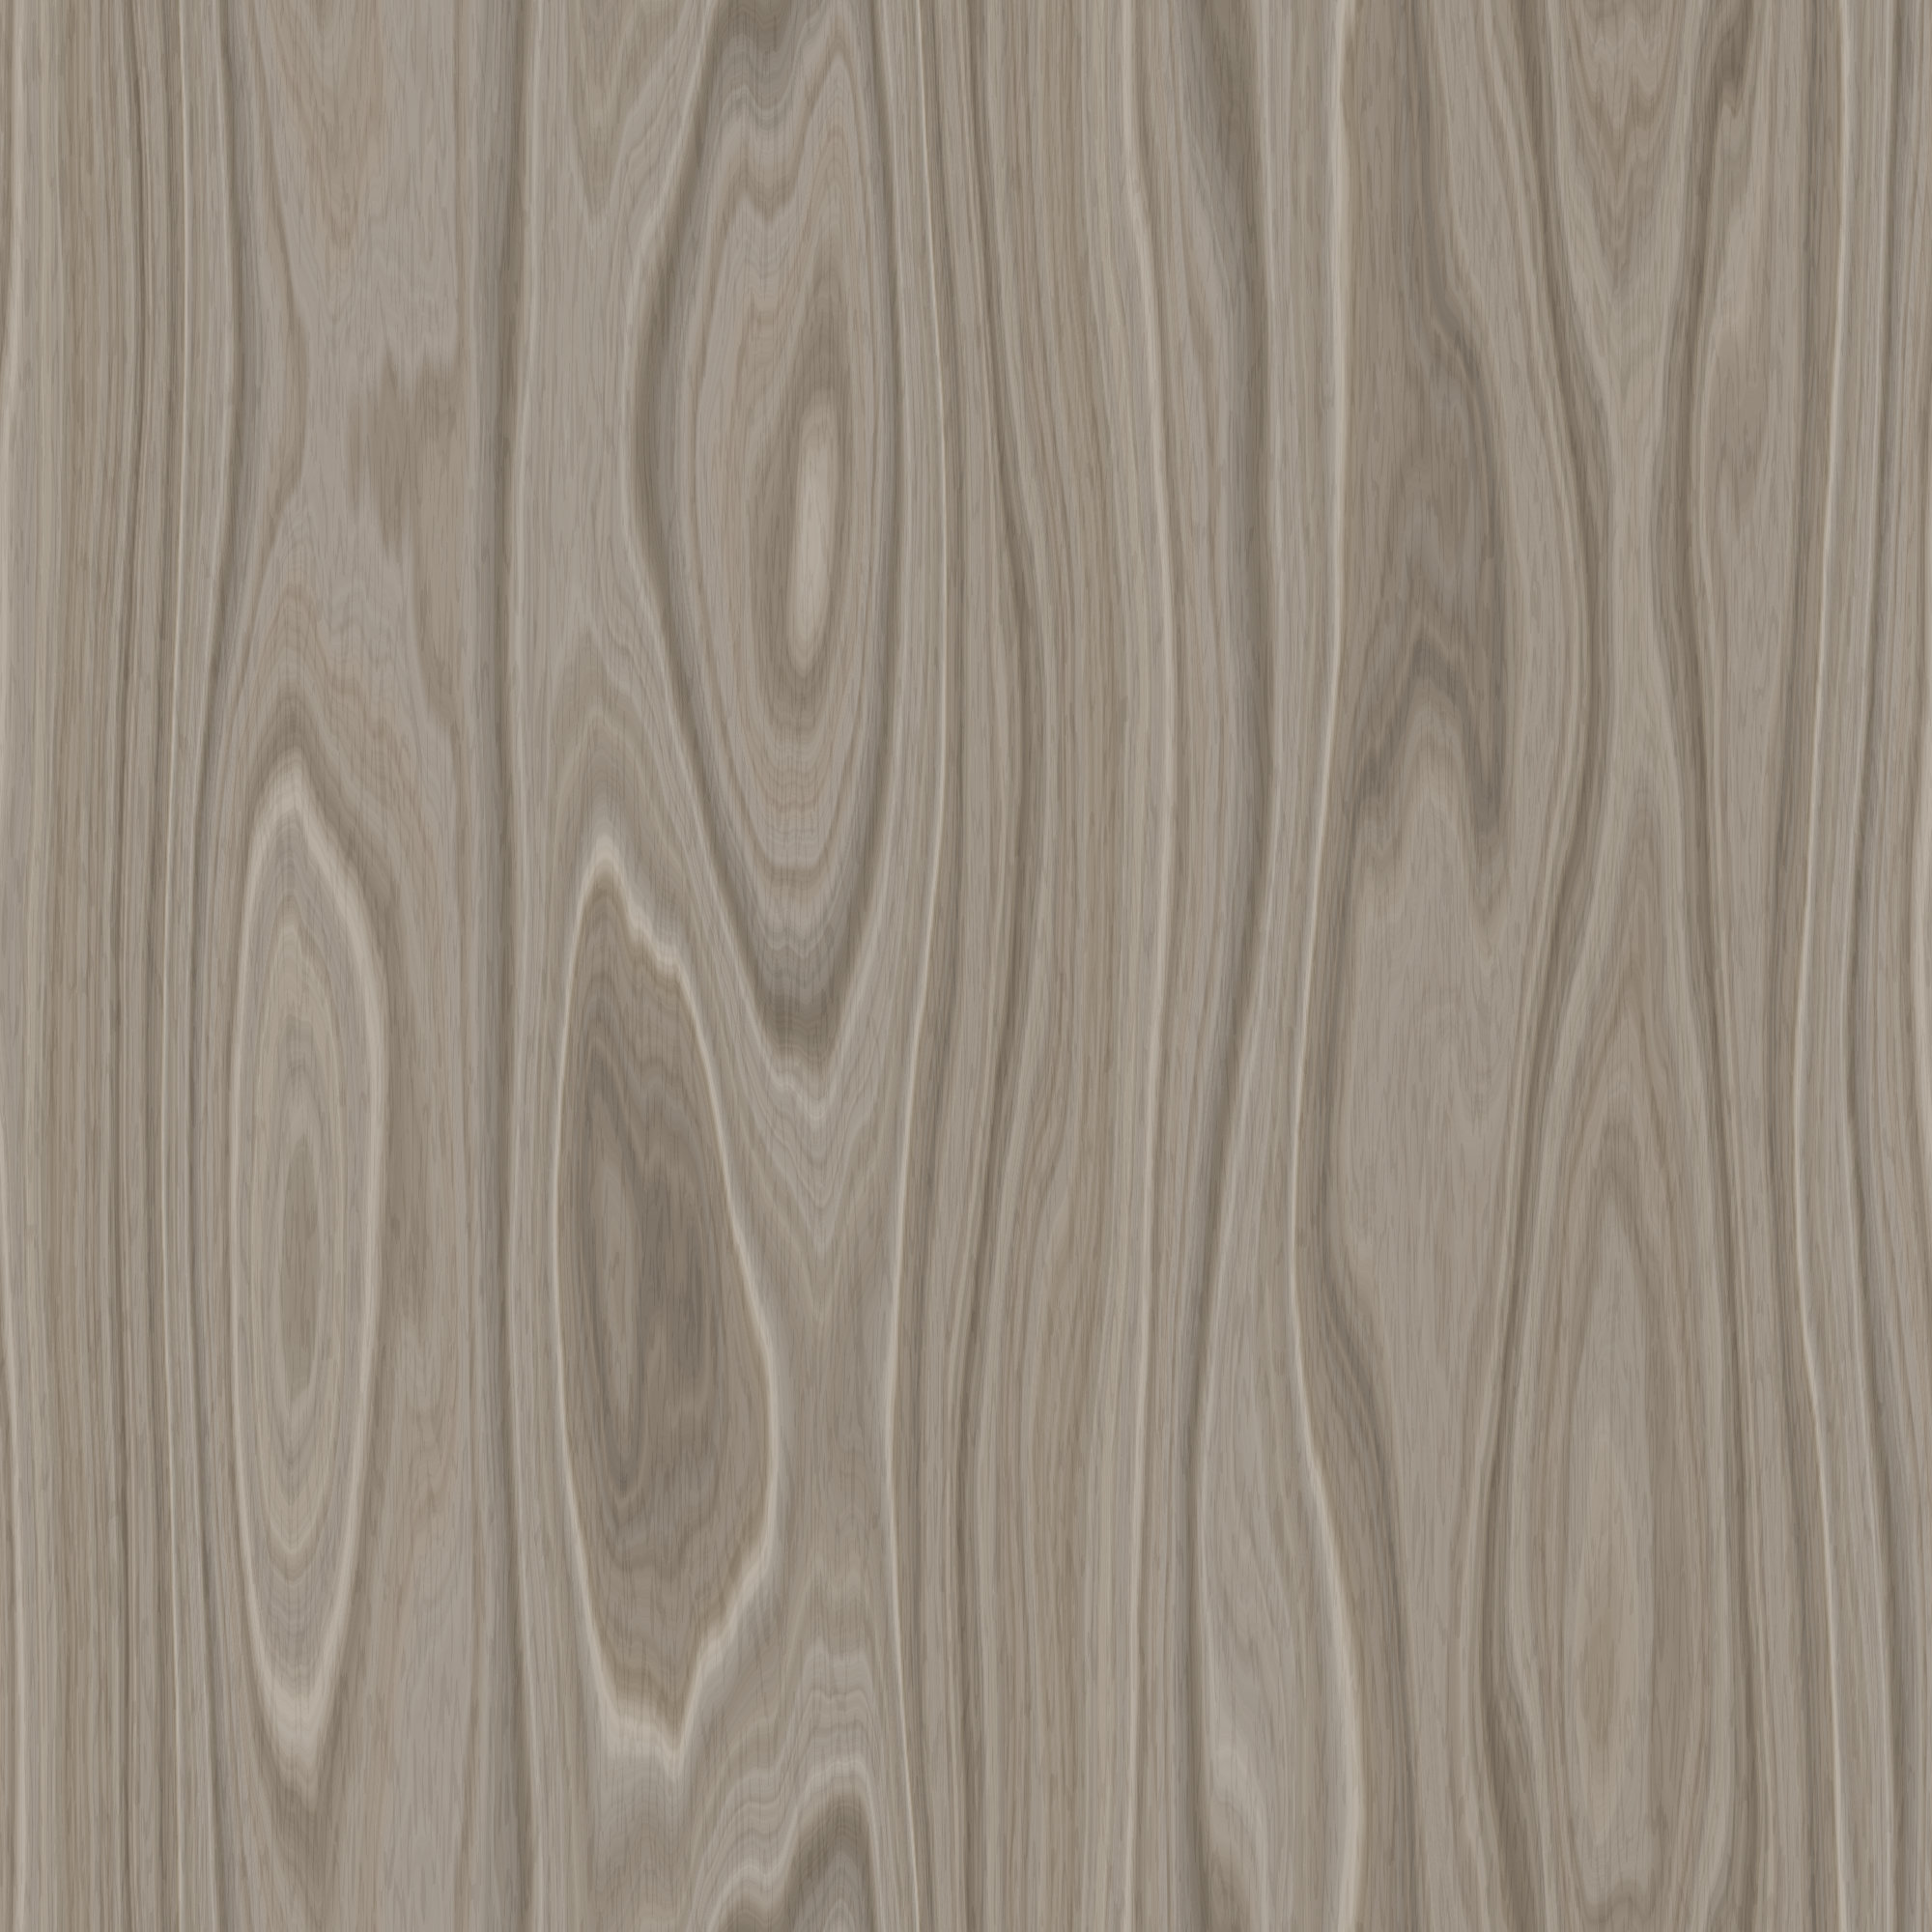 And Seamless Wood Textures Texture Dark